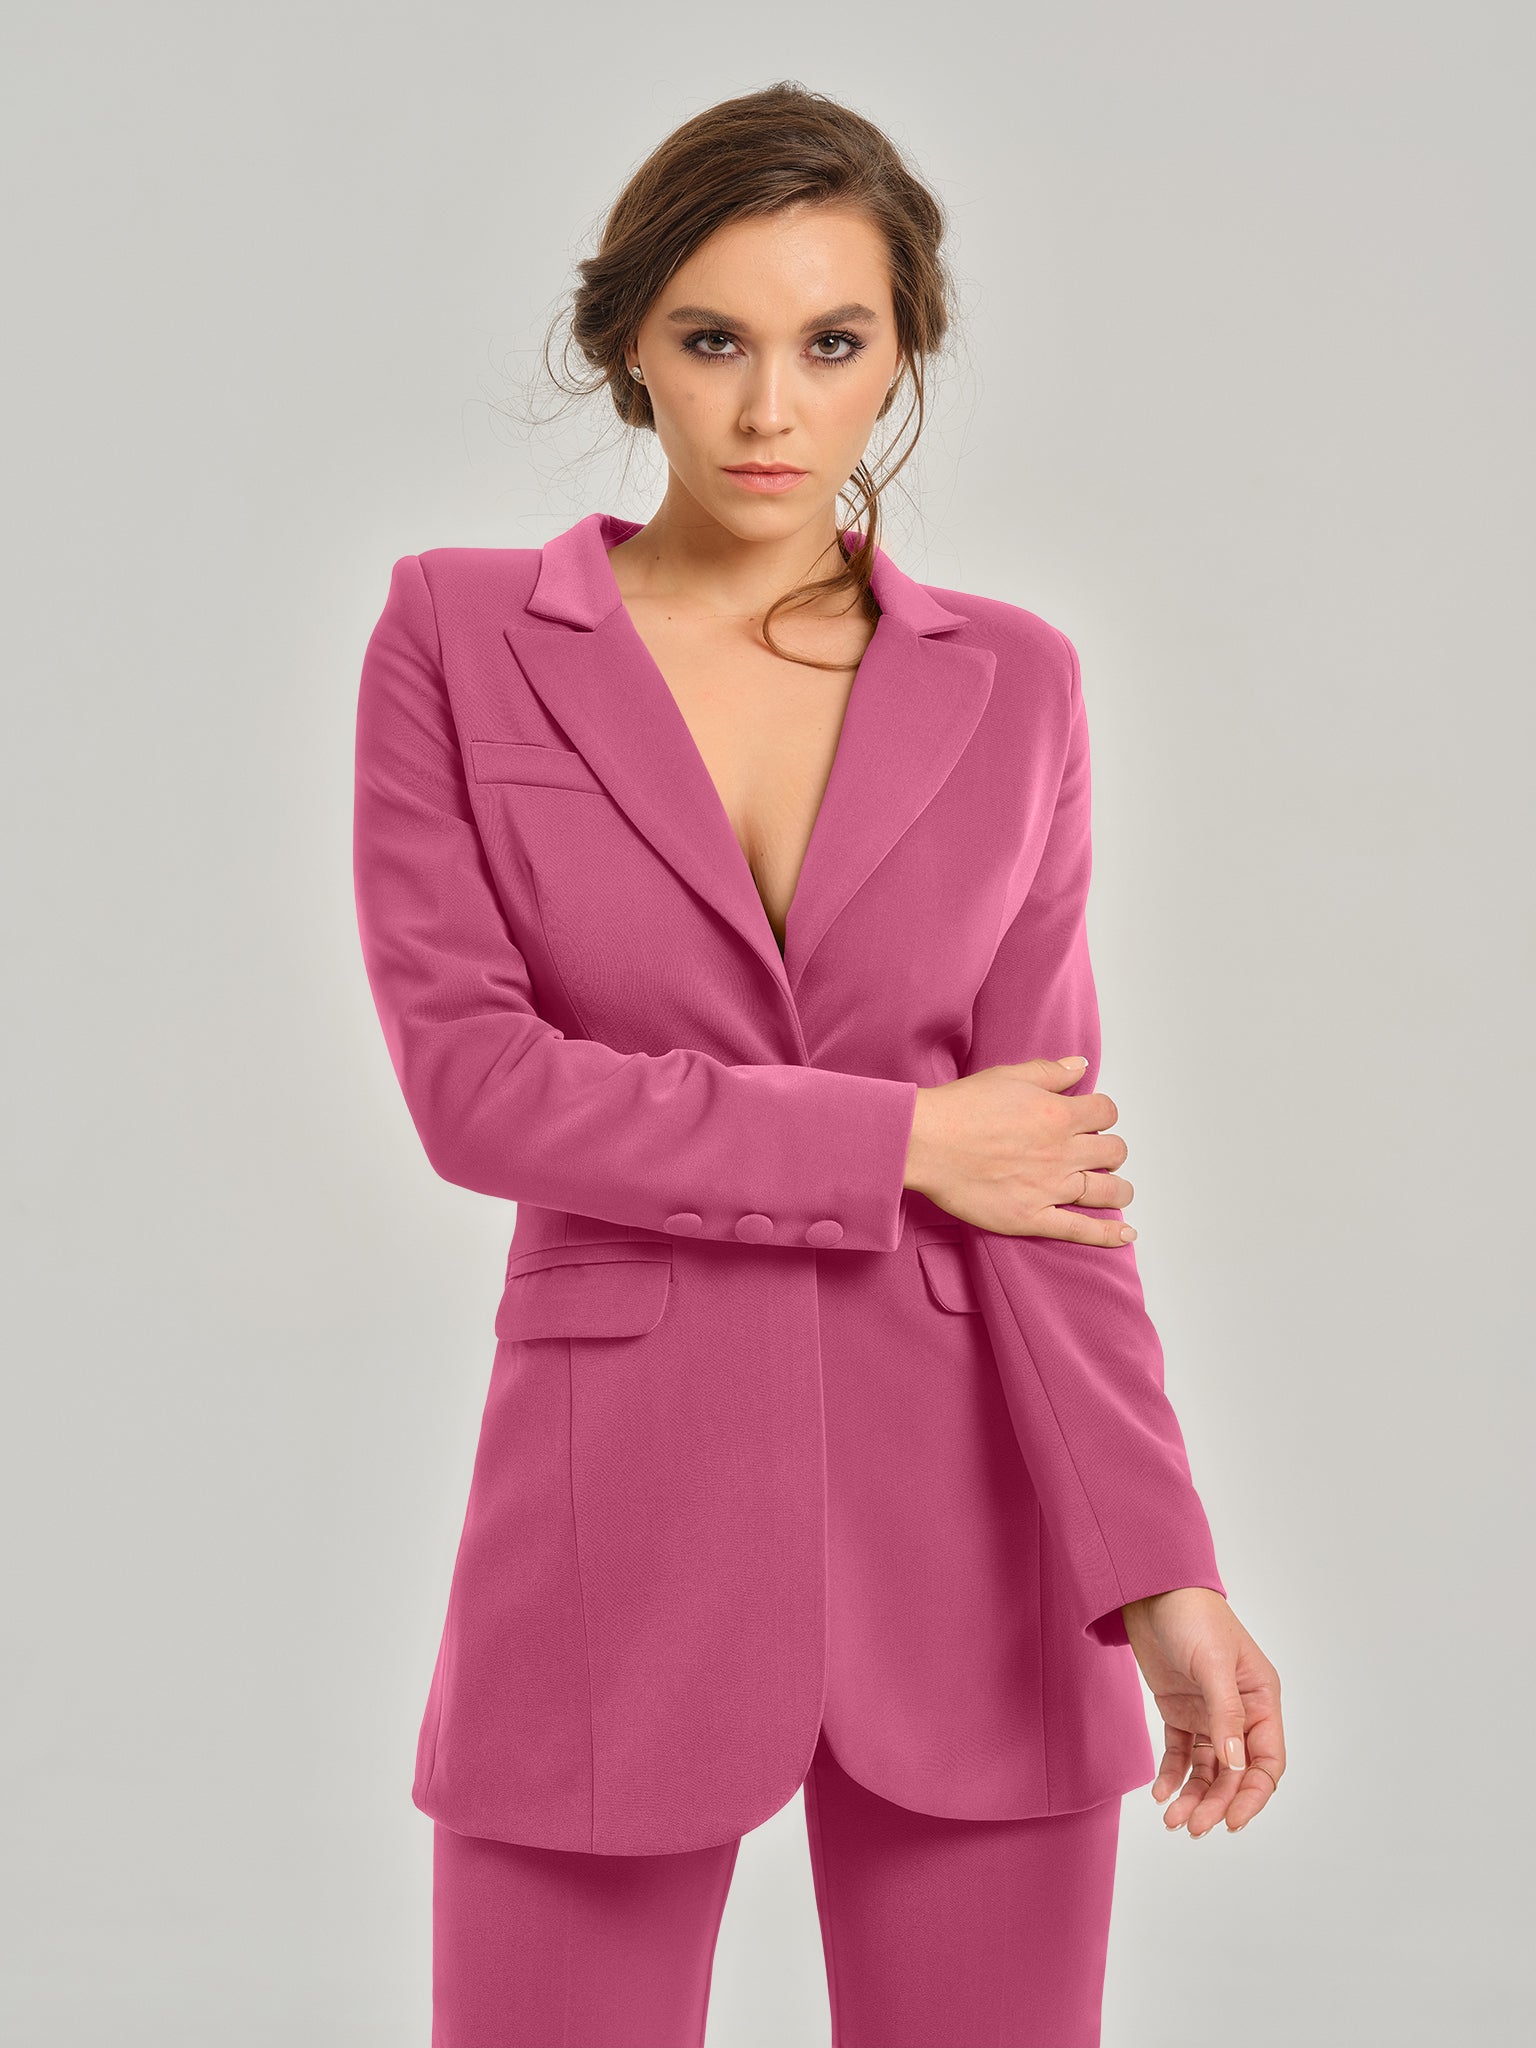 Sweet Desire Timeless Classic Blazer by Tia Dorraine Women's Luxury Fashion Designer Clothing Brand